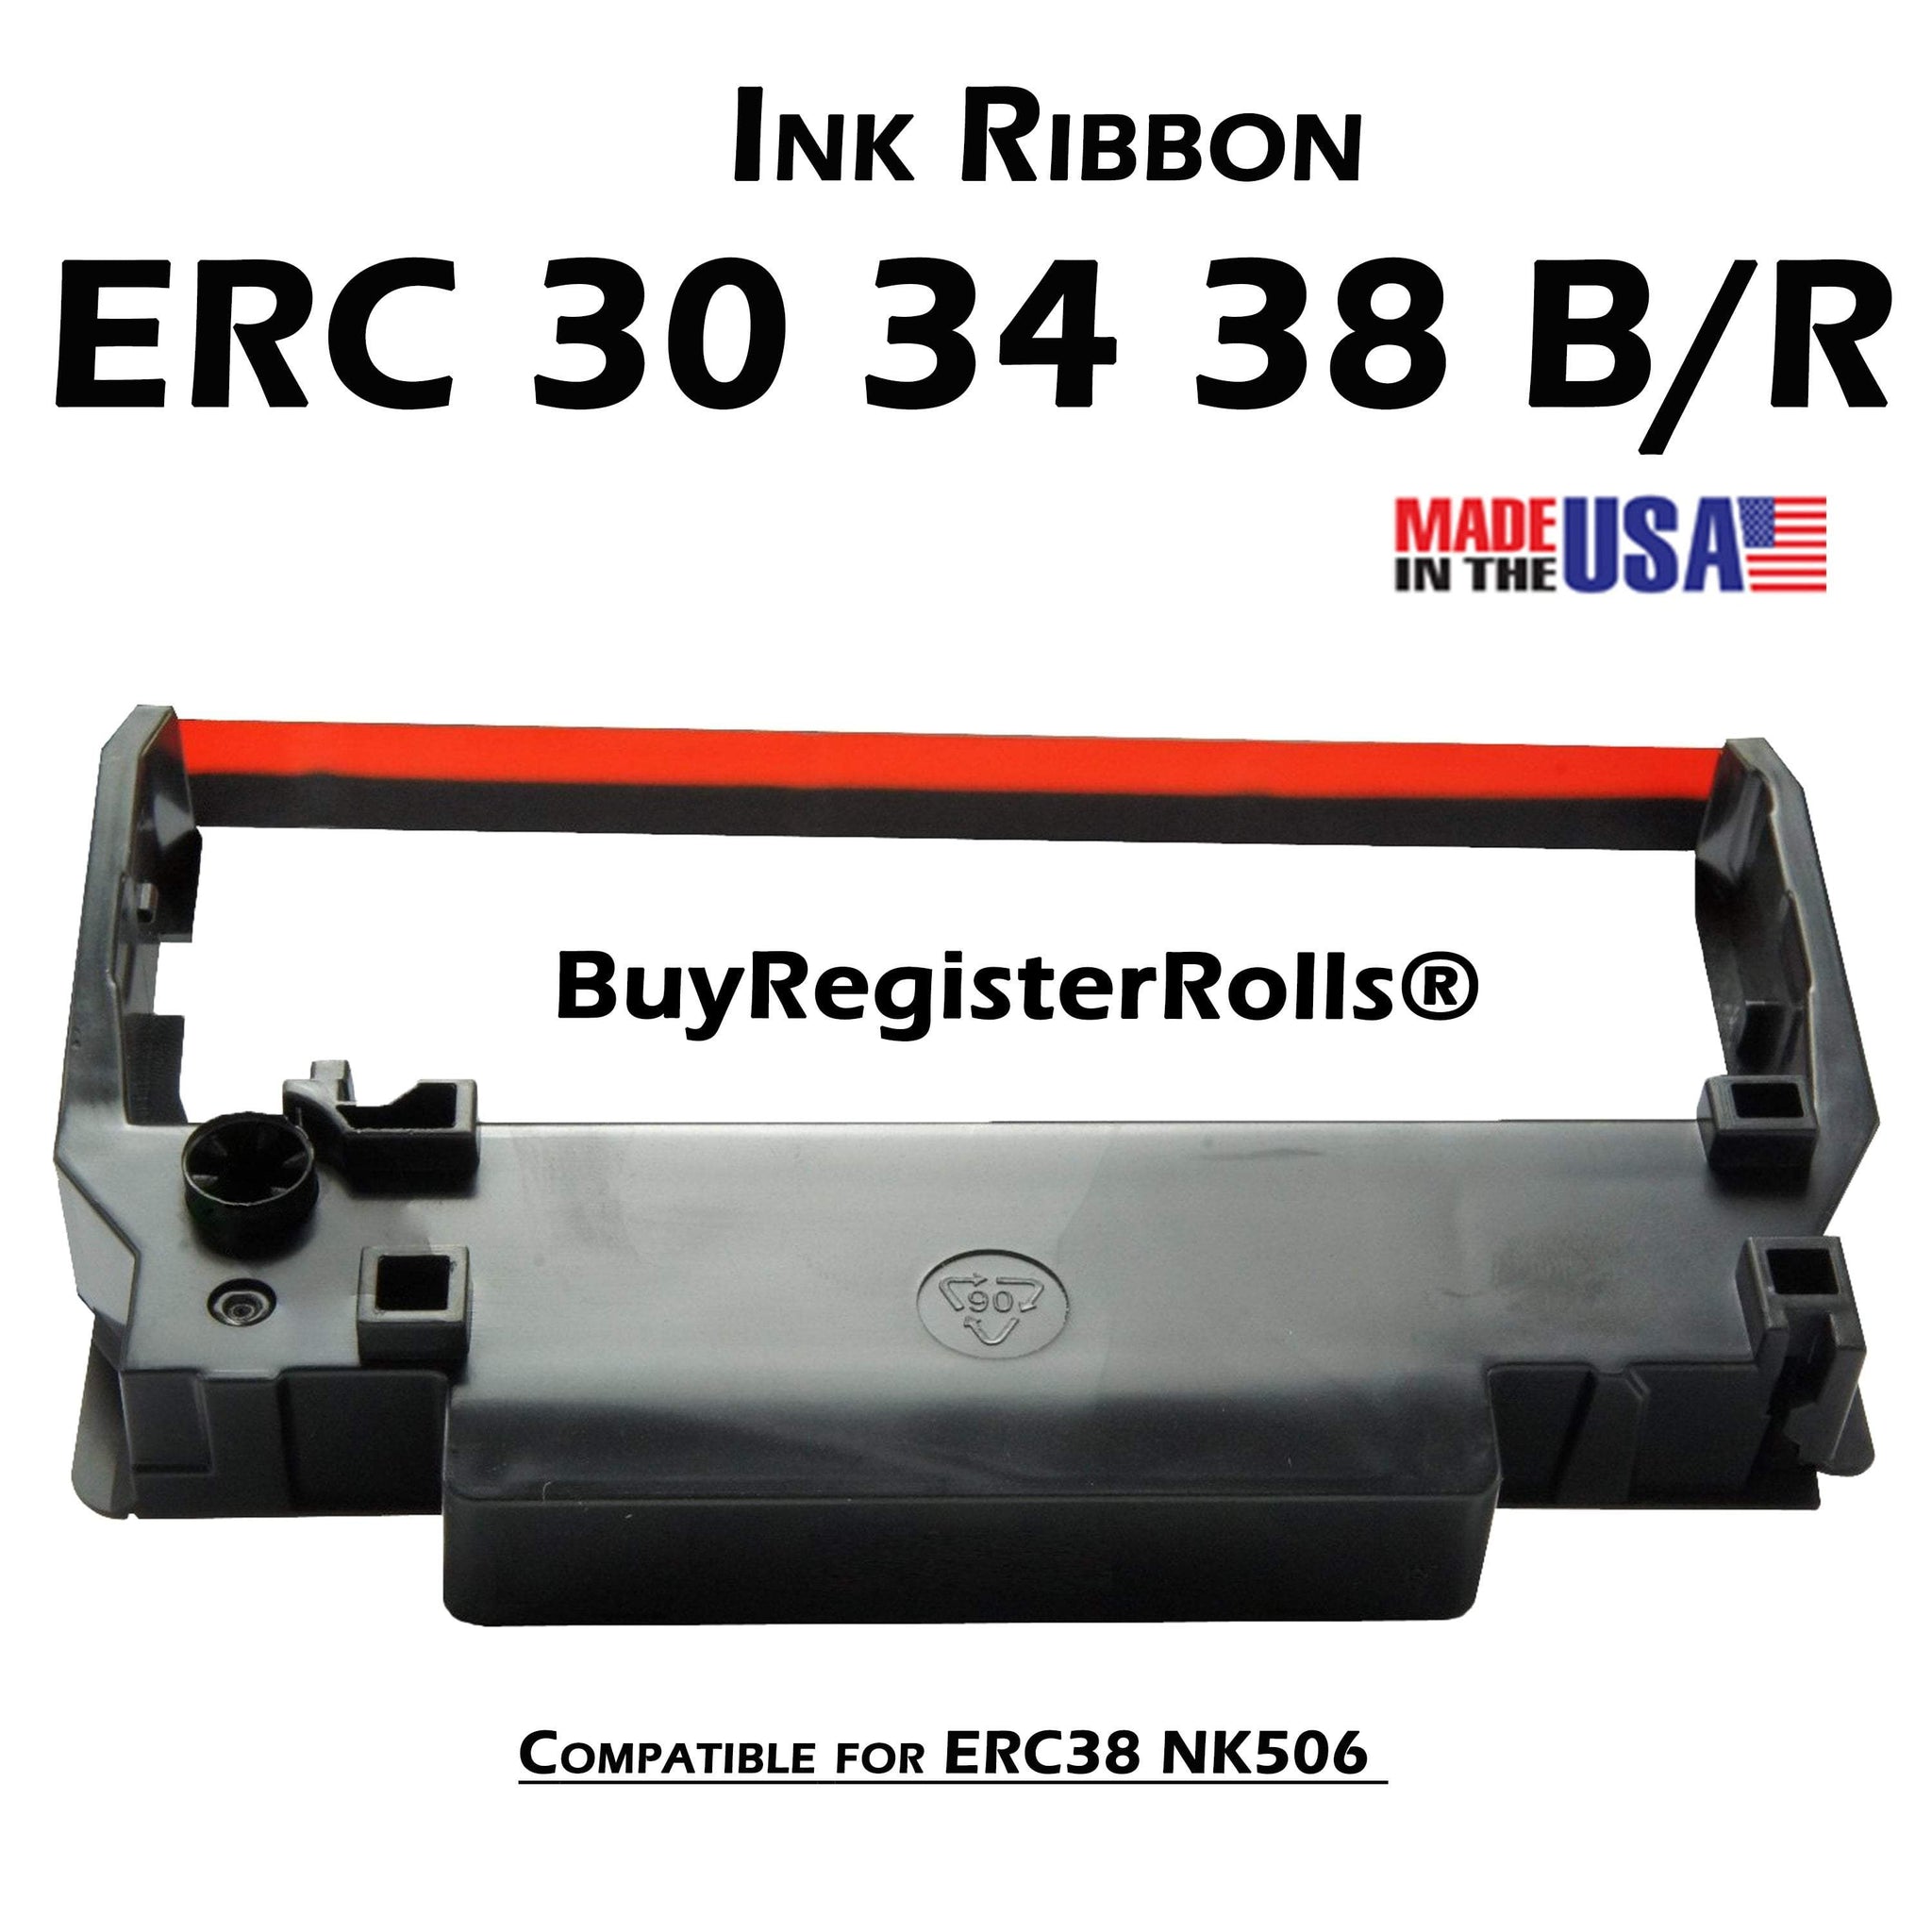 Cartridge Erc 303438 Eprint